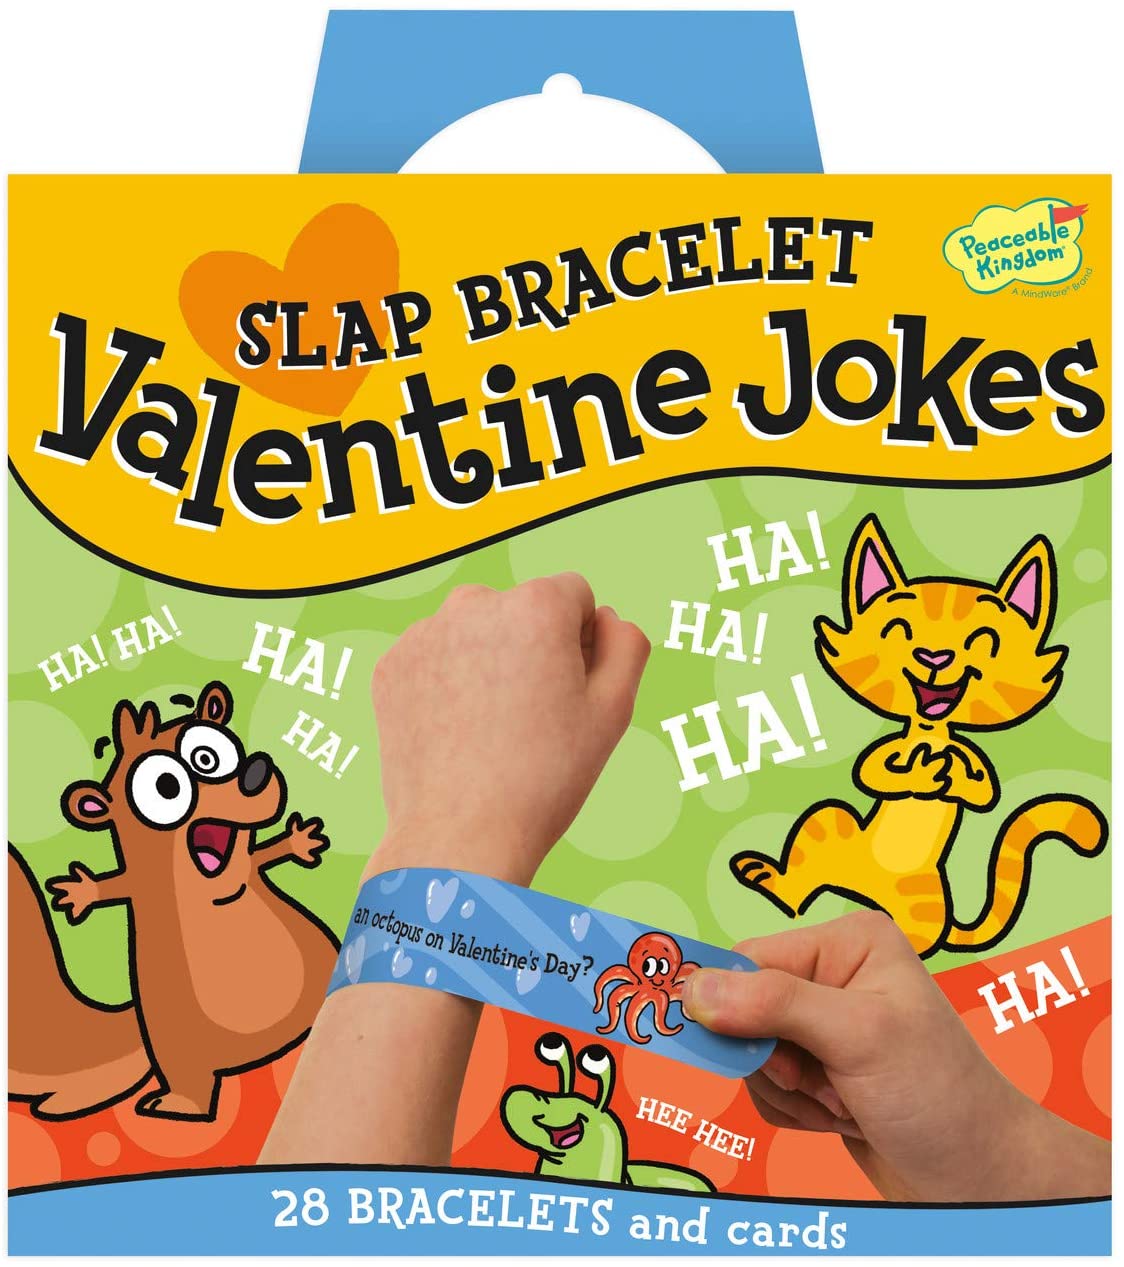 Slap Bracelet Valentine Jokes Store Bought Valentines